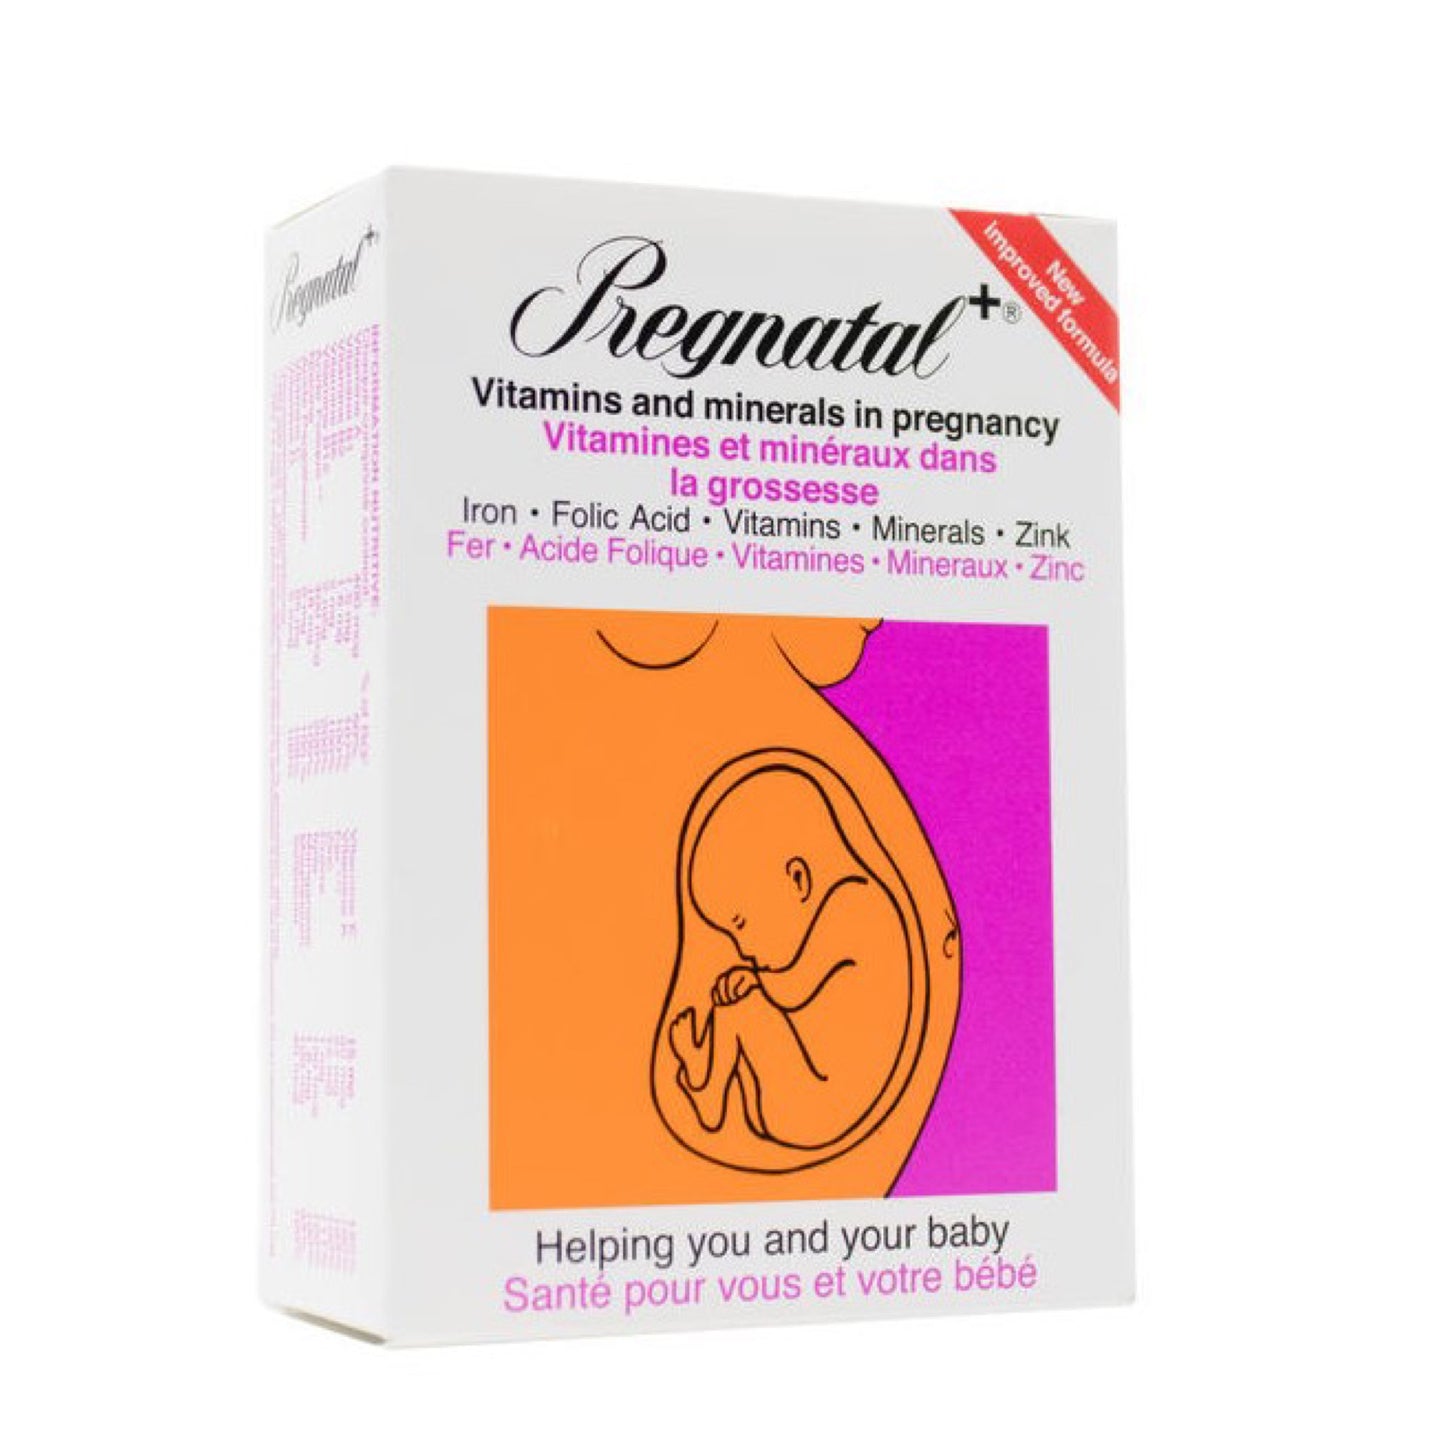 Pregnatal Pregnancy Vitamins 30 Tablet